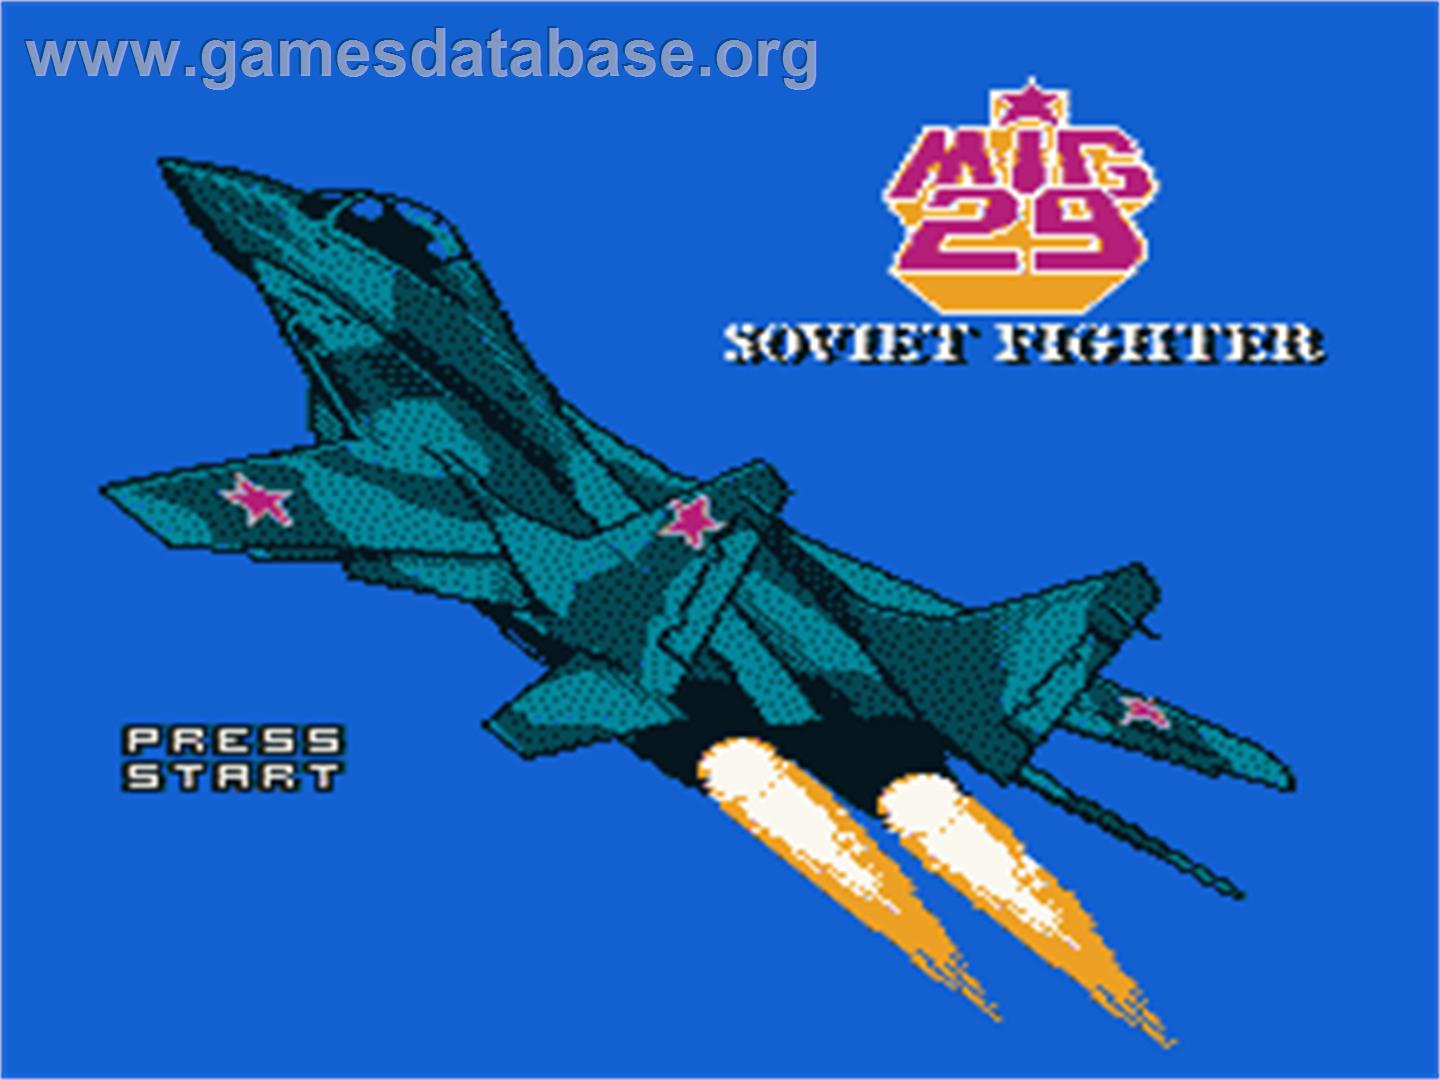 Mig-29 Soviet Fighter - Nintendo NES - Artwork - Title Screen